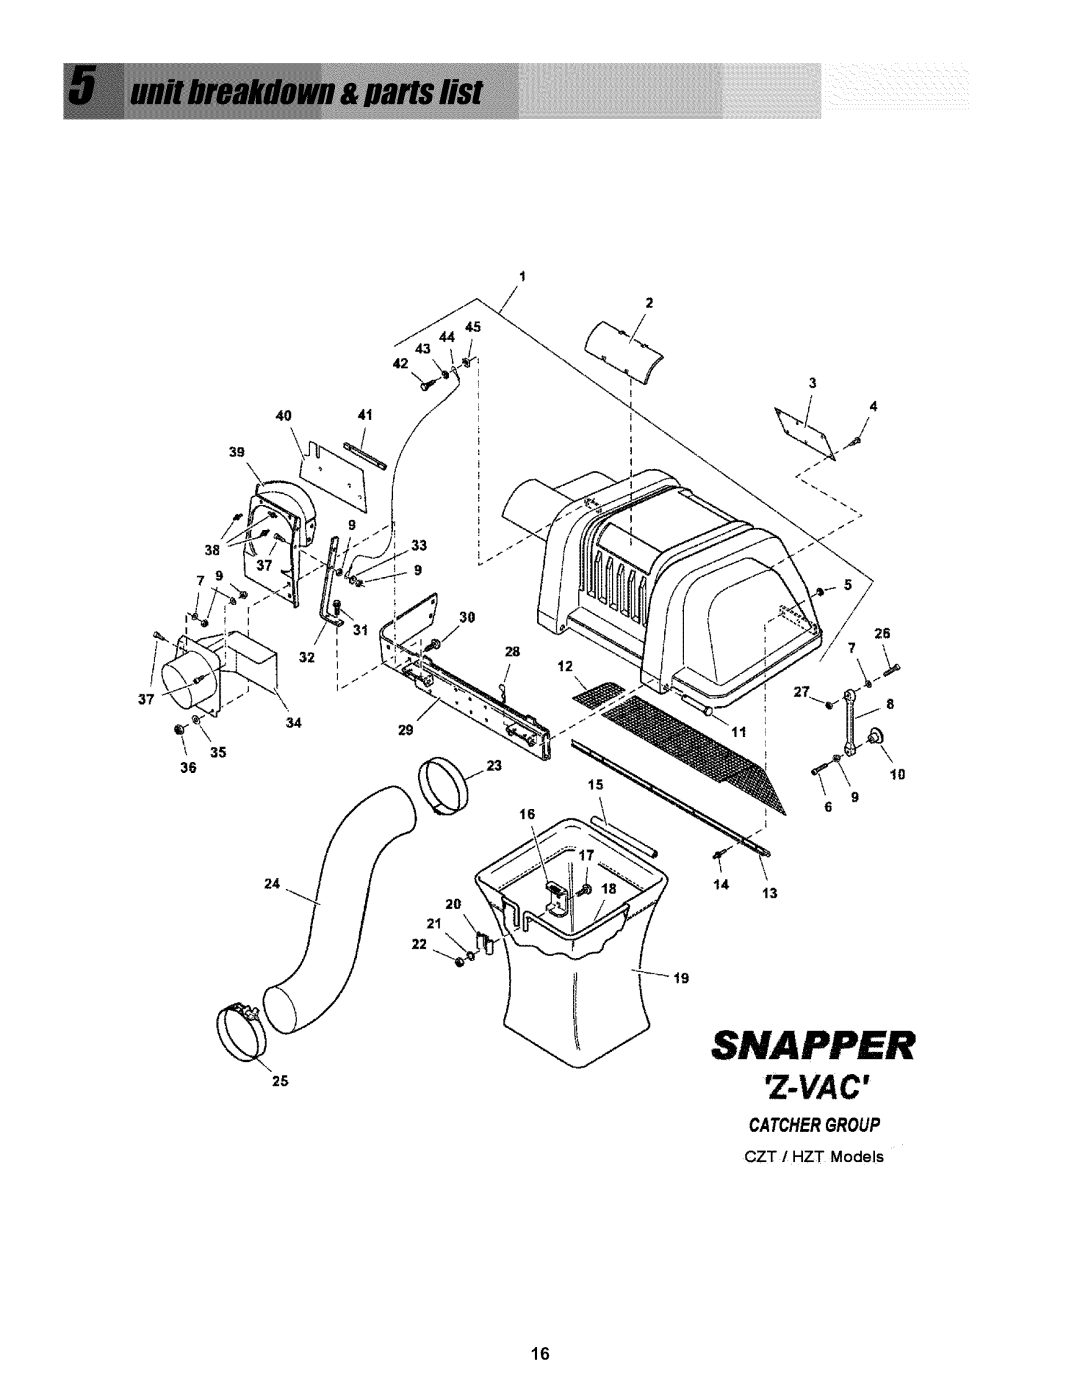 Snapper P/N 7078273, 0-50576 manual Z-Vac, Catchergroup, CZT/HZT Models 